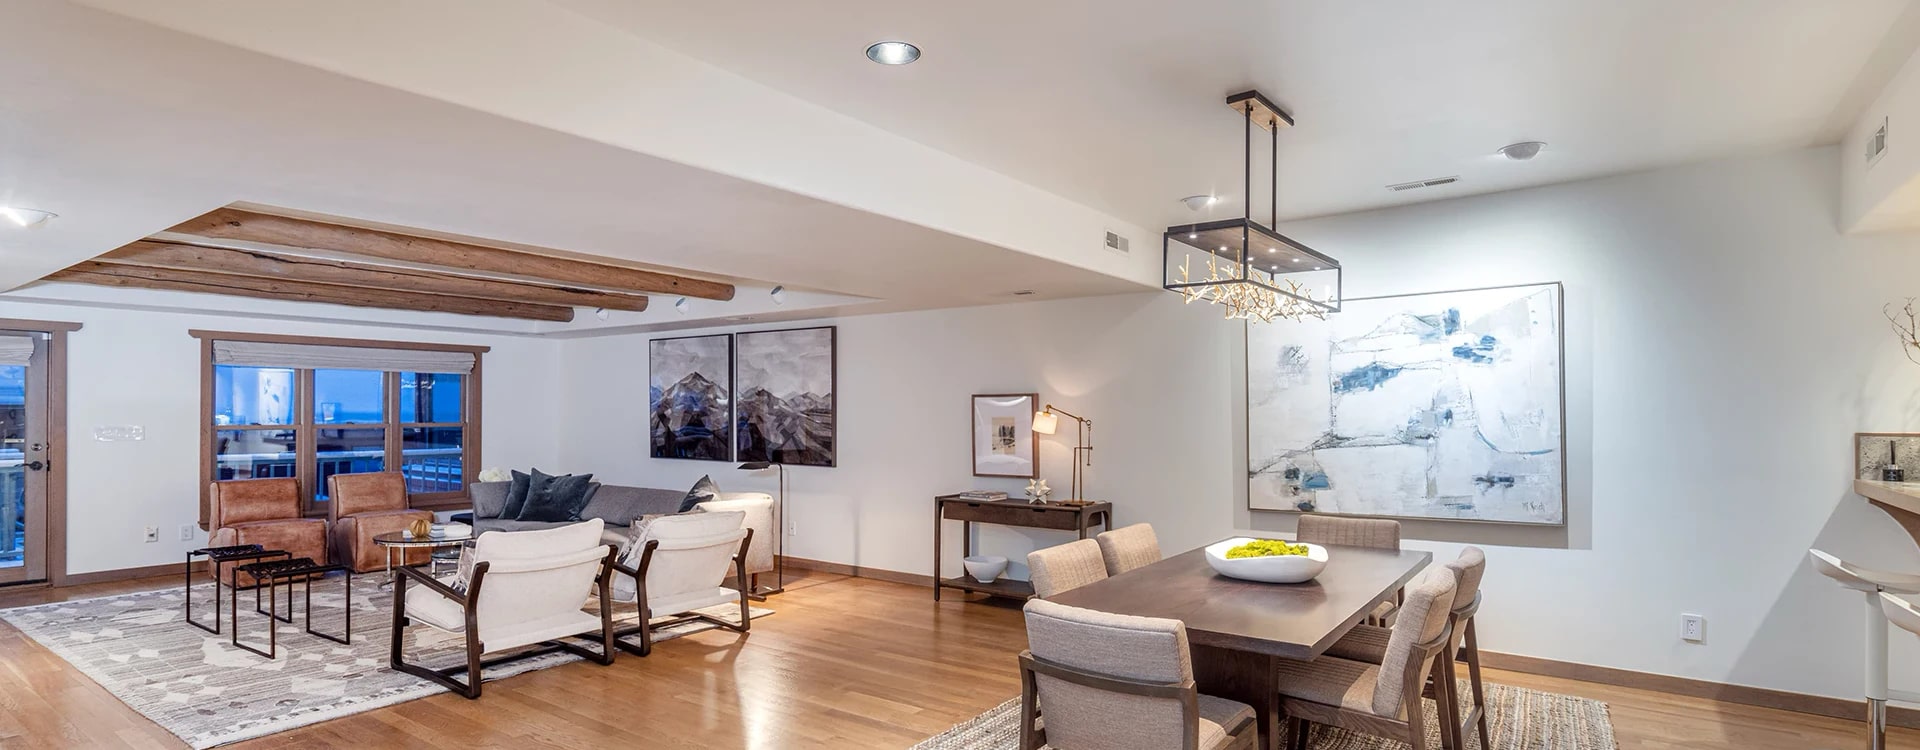 3.0-telluride-heritage-penthouse-dining-living-room.webp